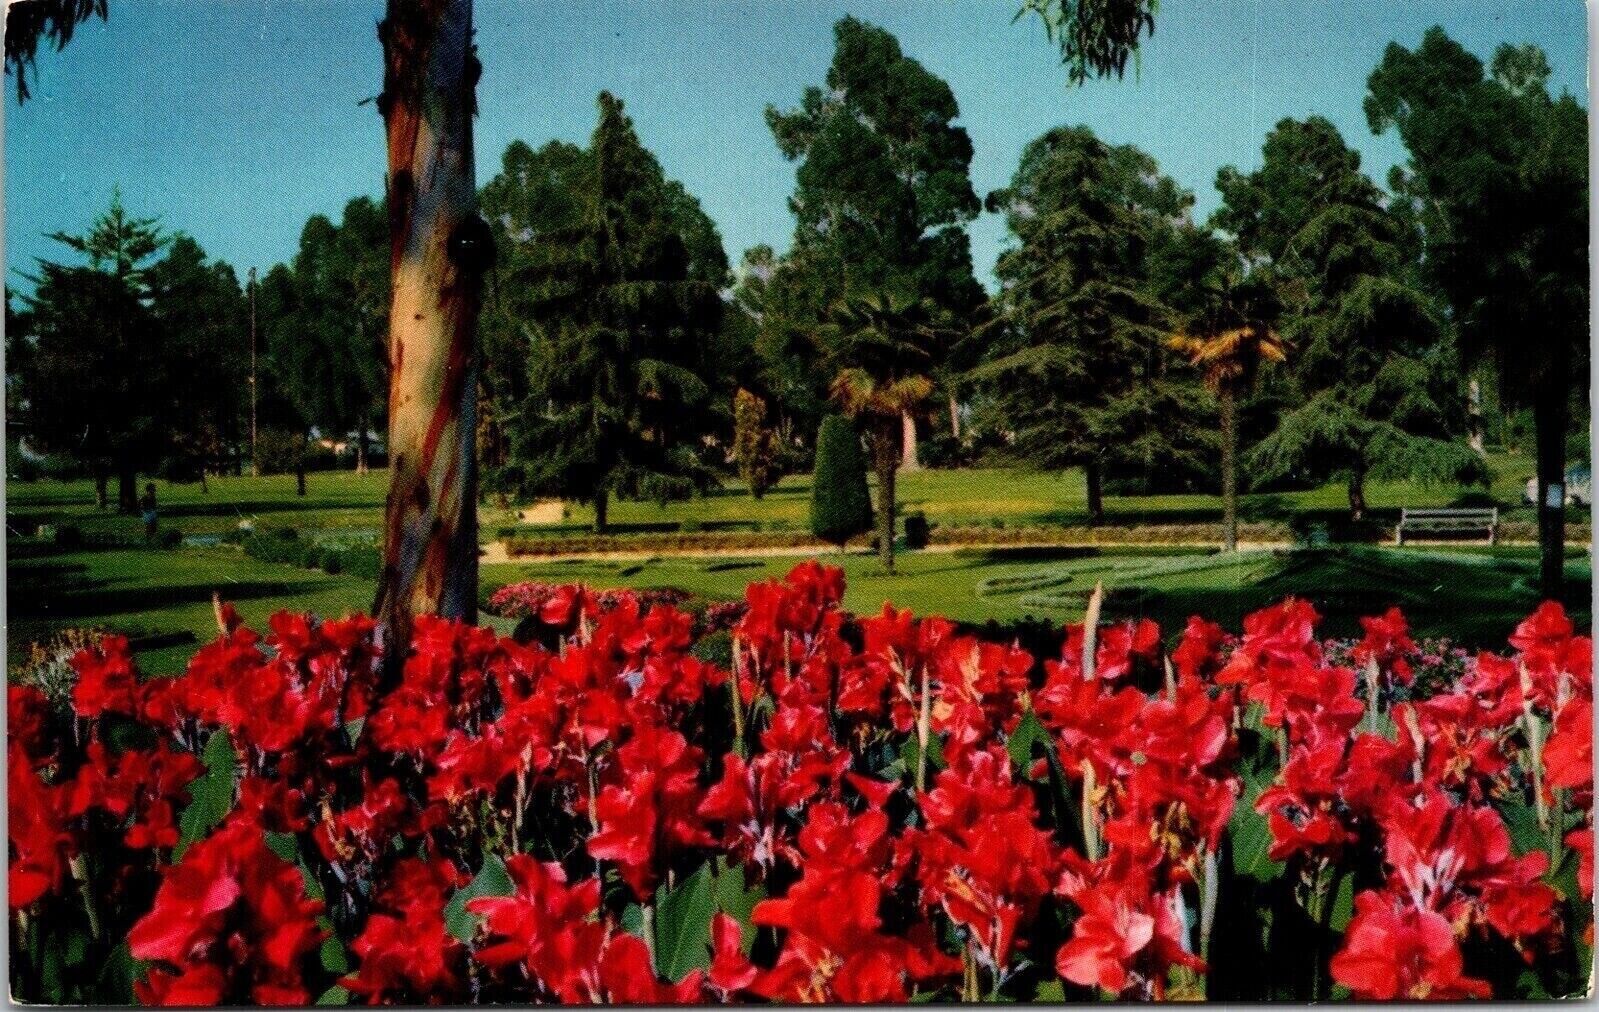 Long Beach California CA Red Cannas Sunken Gardens Park Postcard VTG UNP Mirro